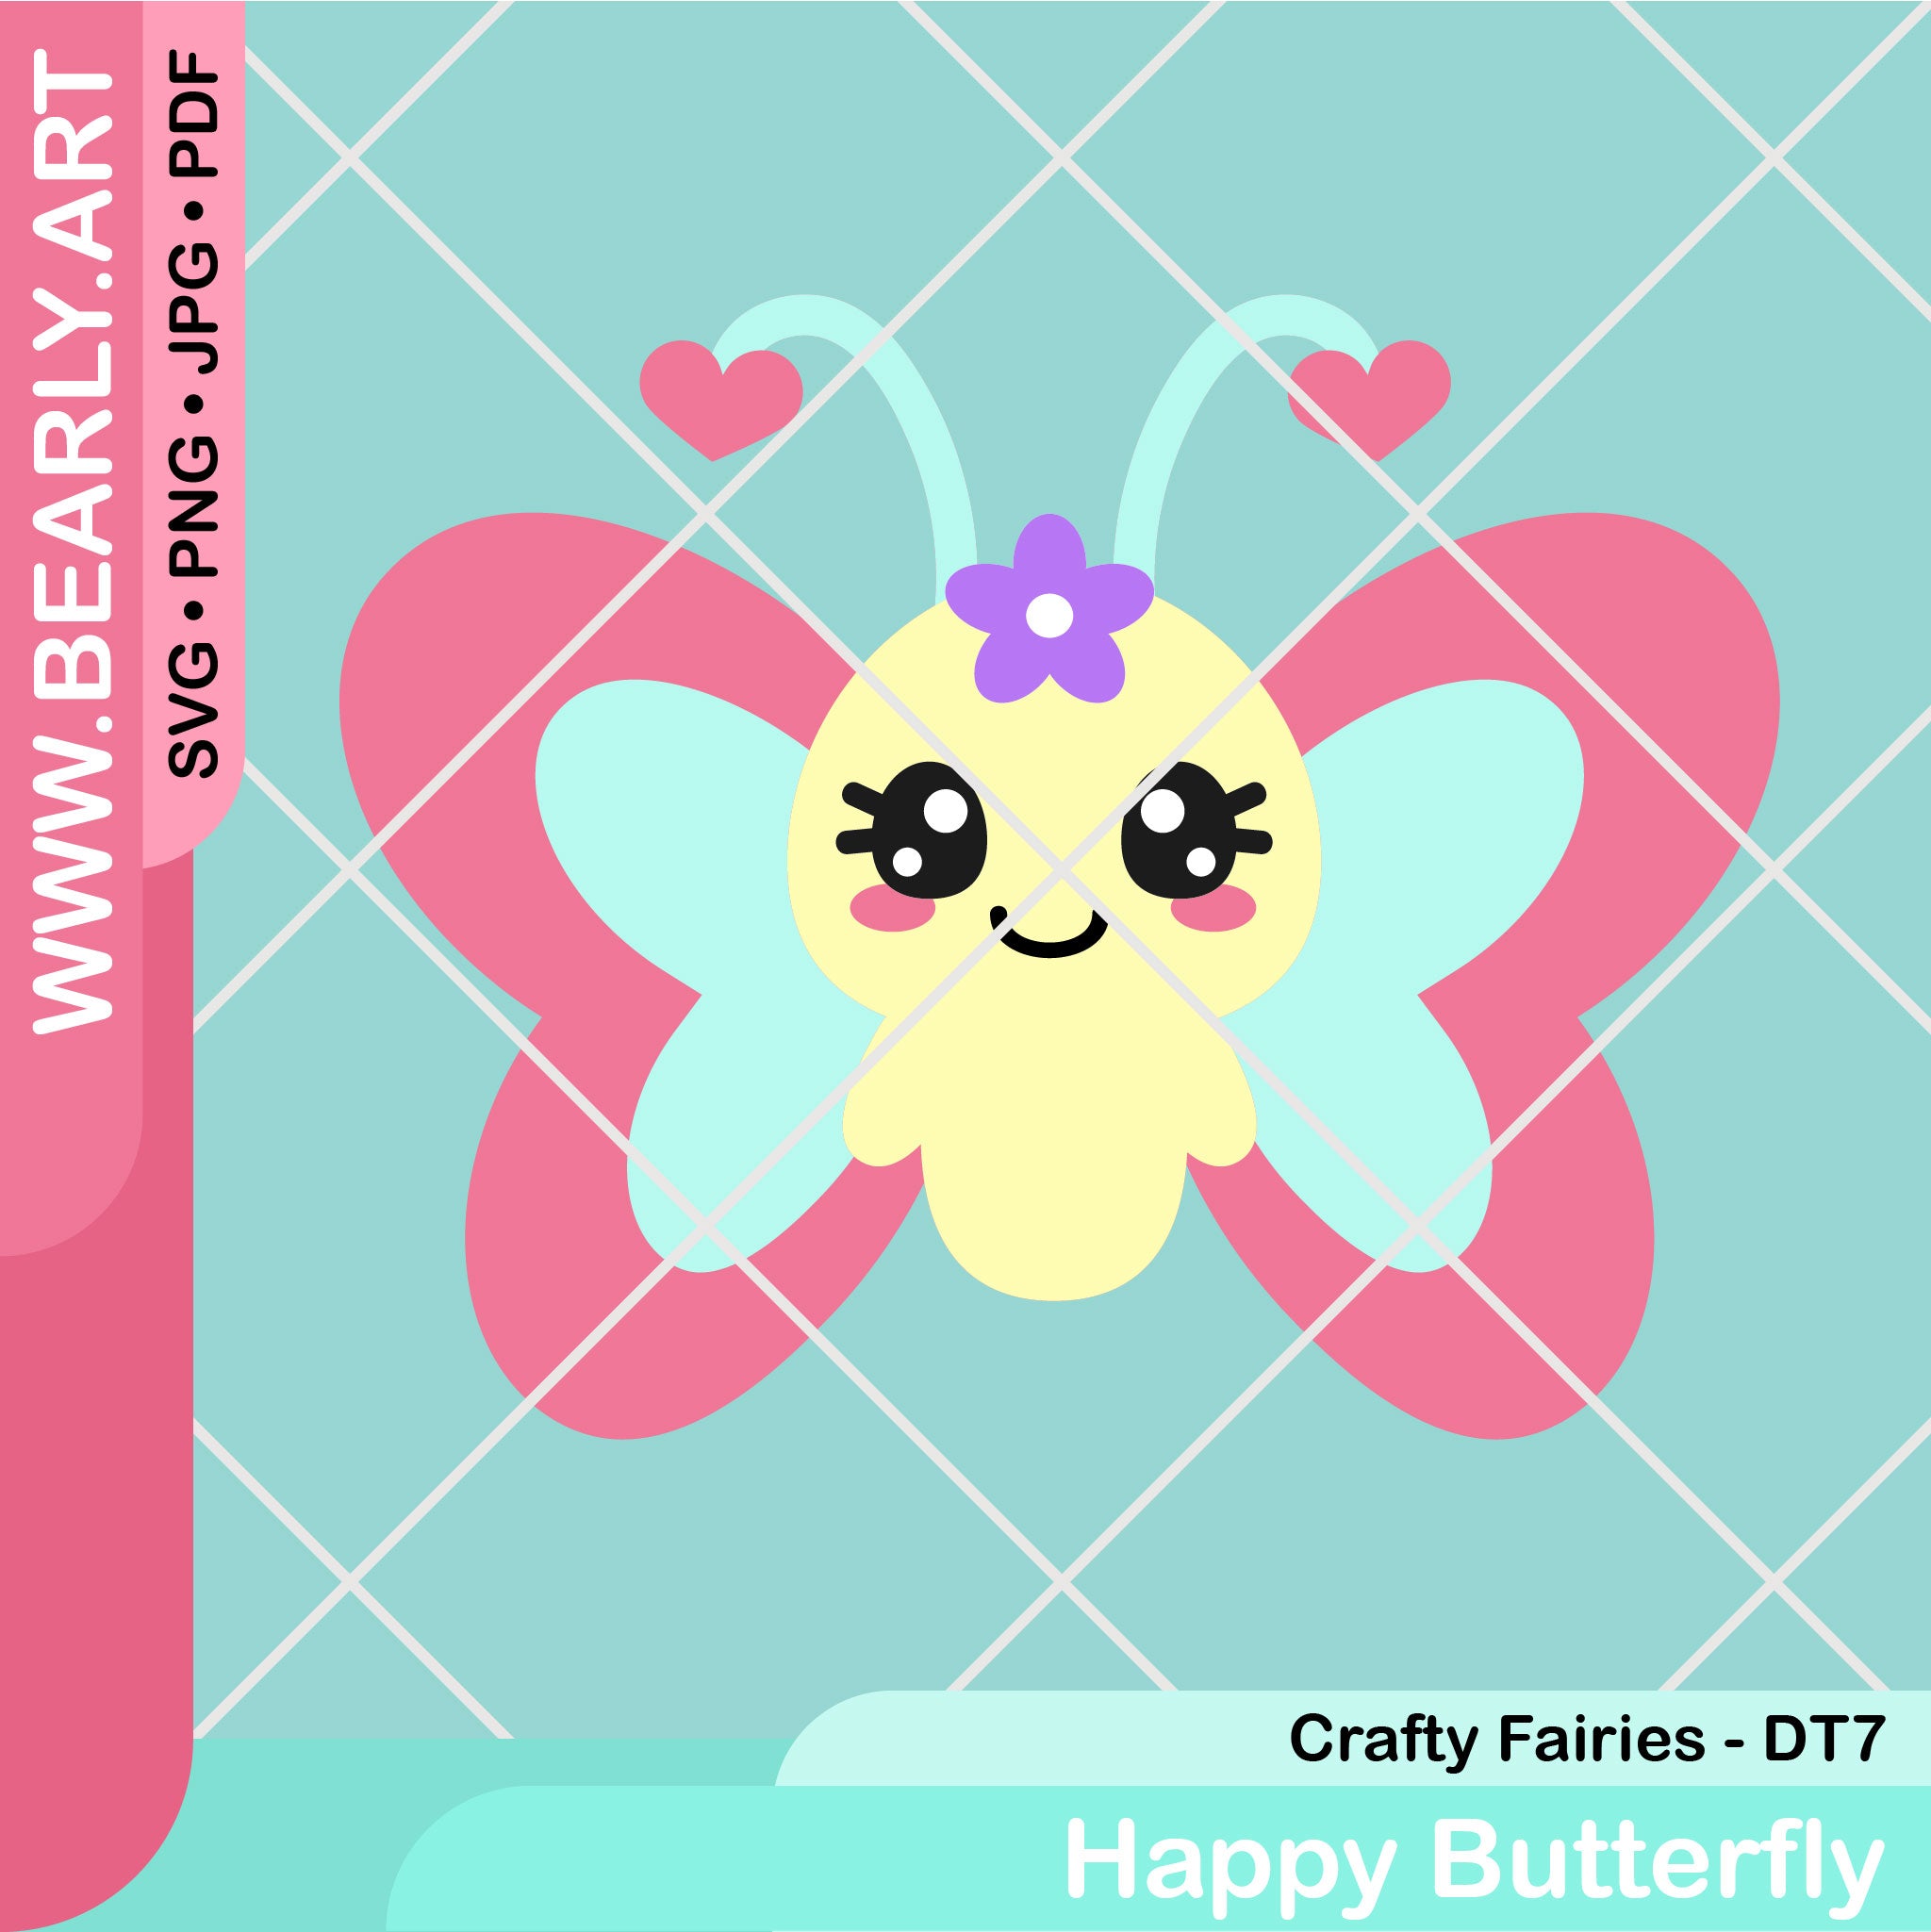 Happy Butterfly - Design Team 7 - Crafty Fairies